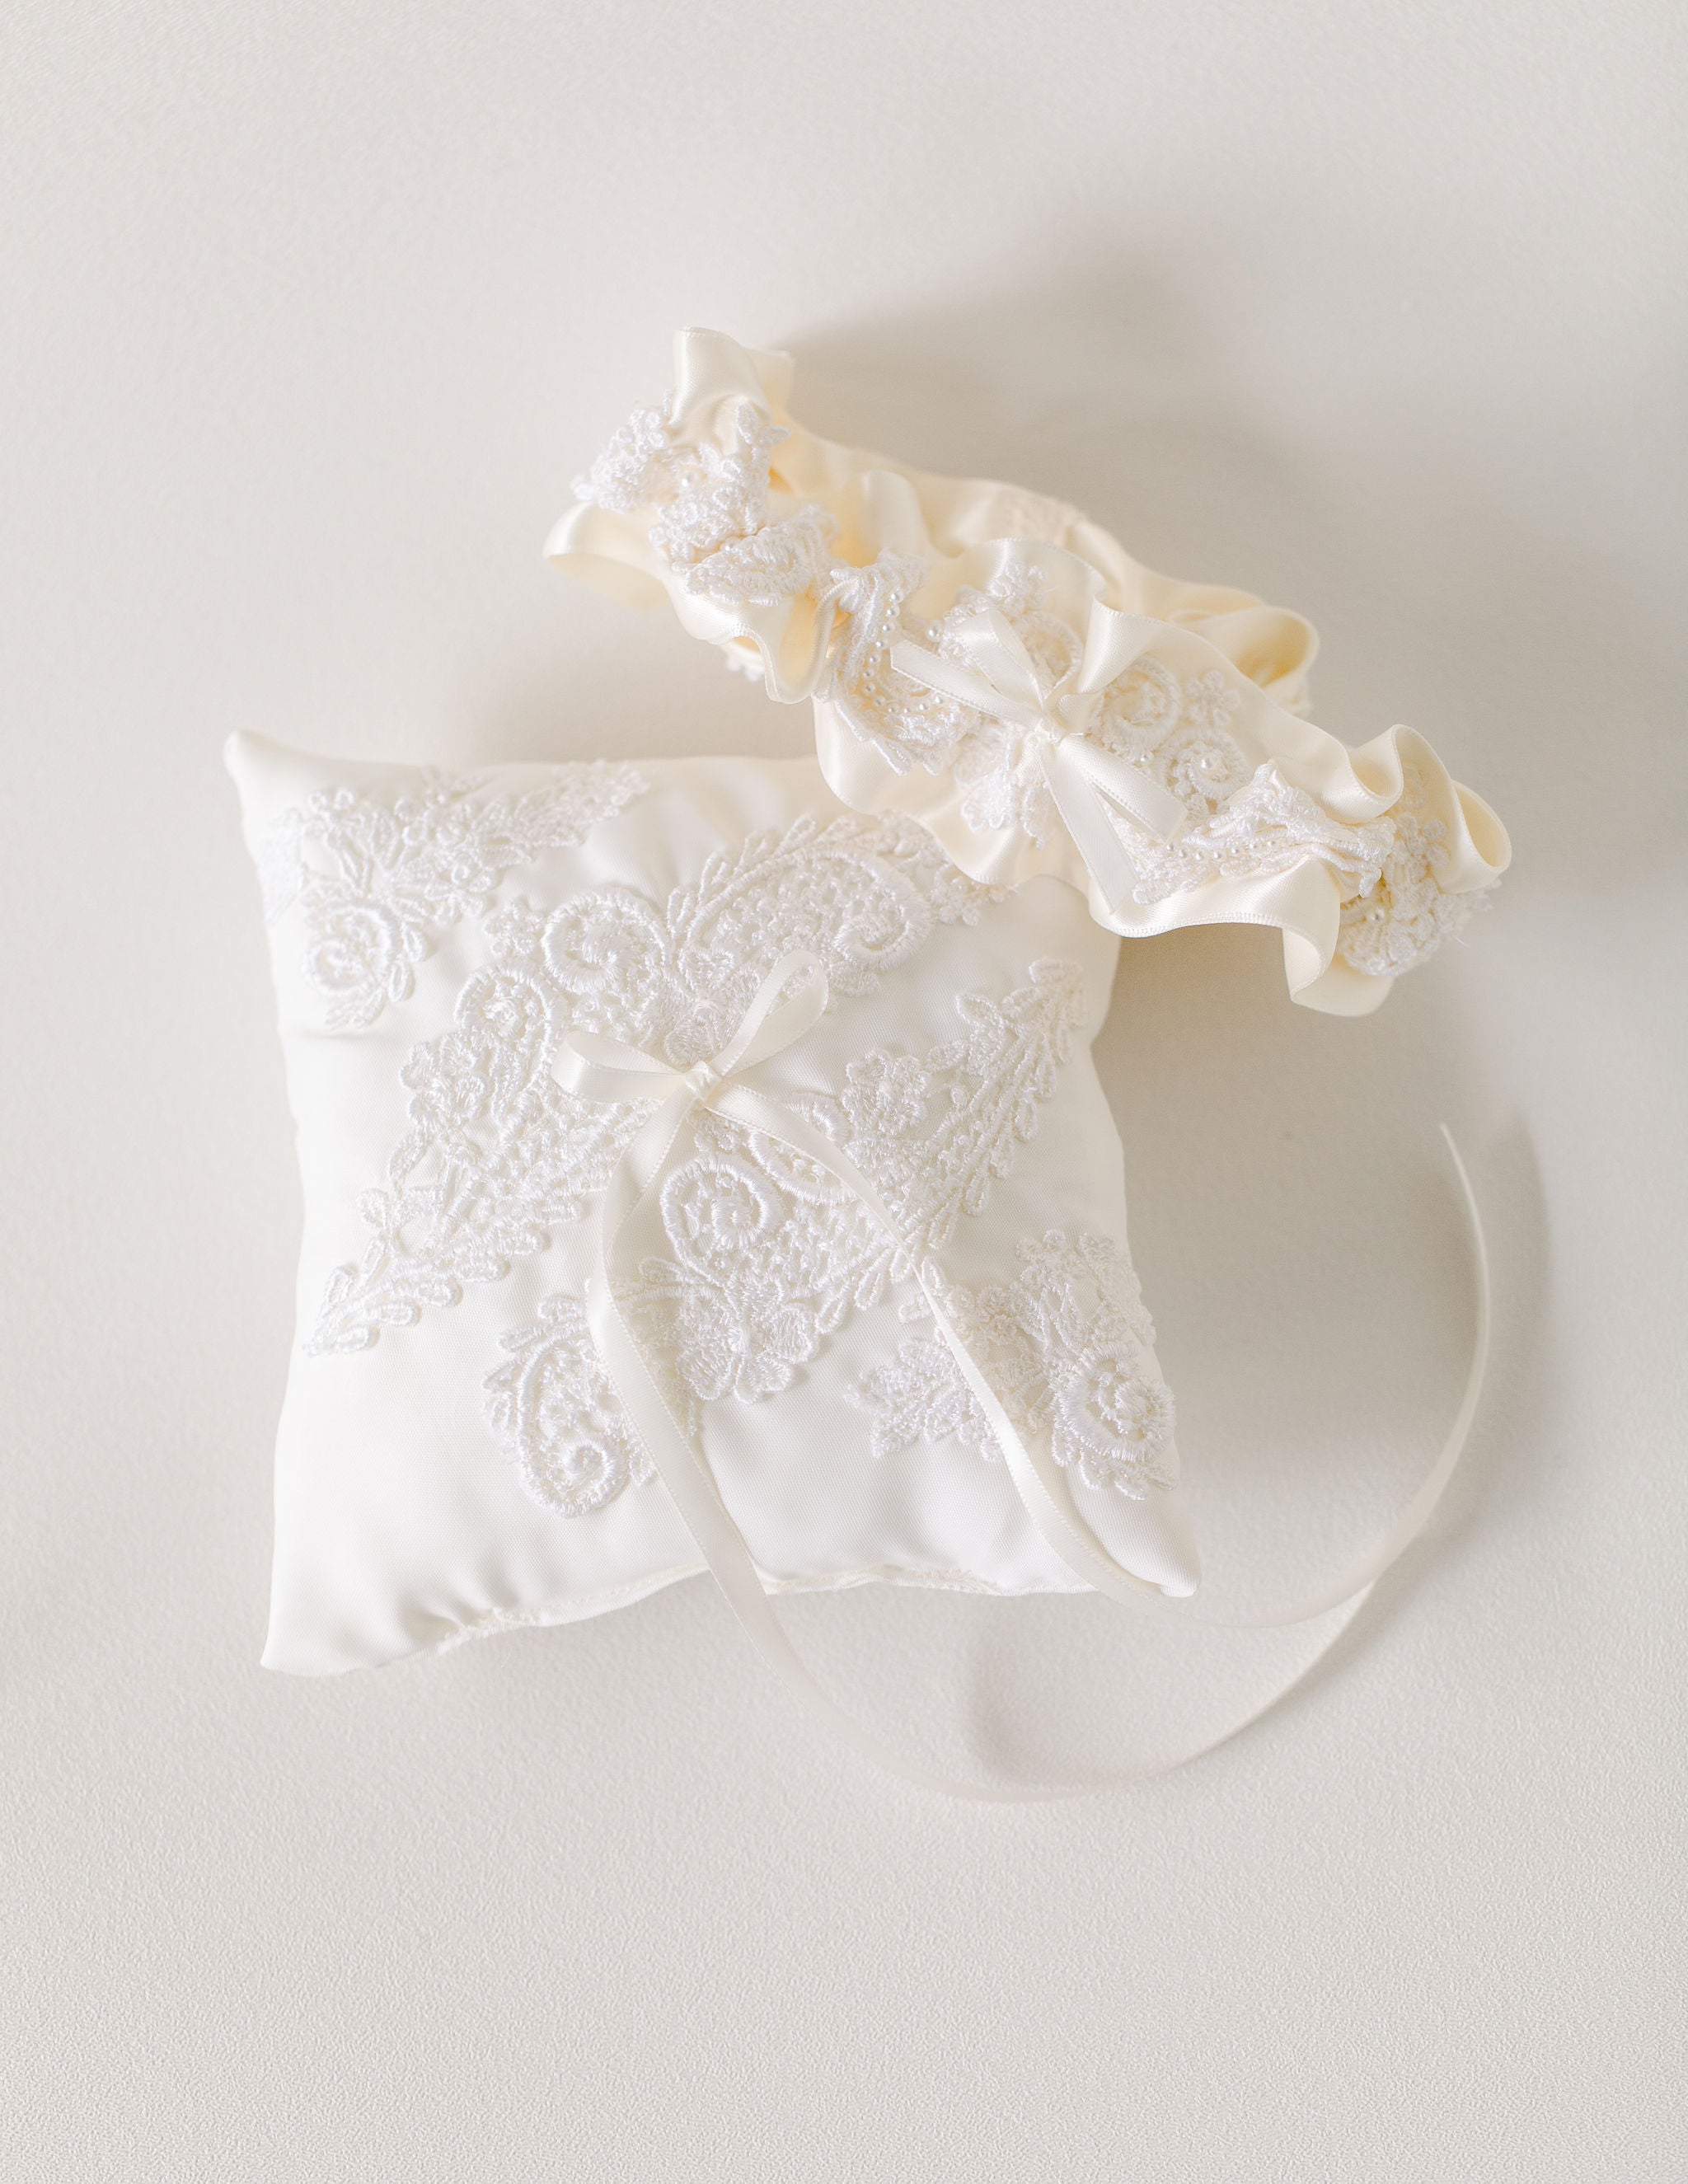 Garter & Ring Bearer Pillow From Mother's Wedding Dress Sleeves